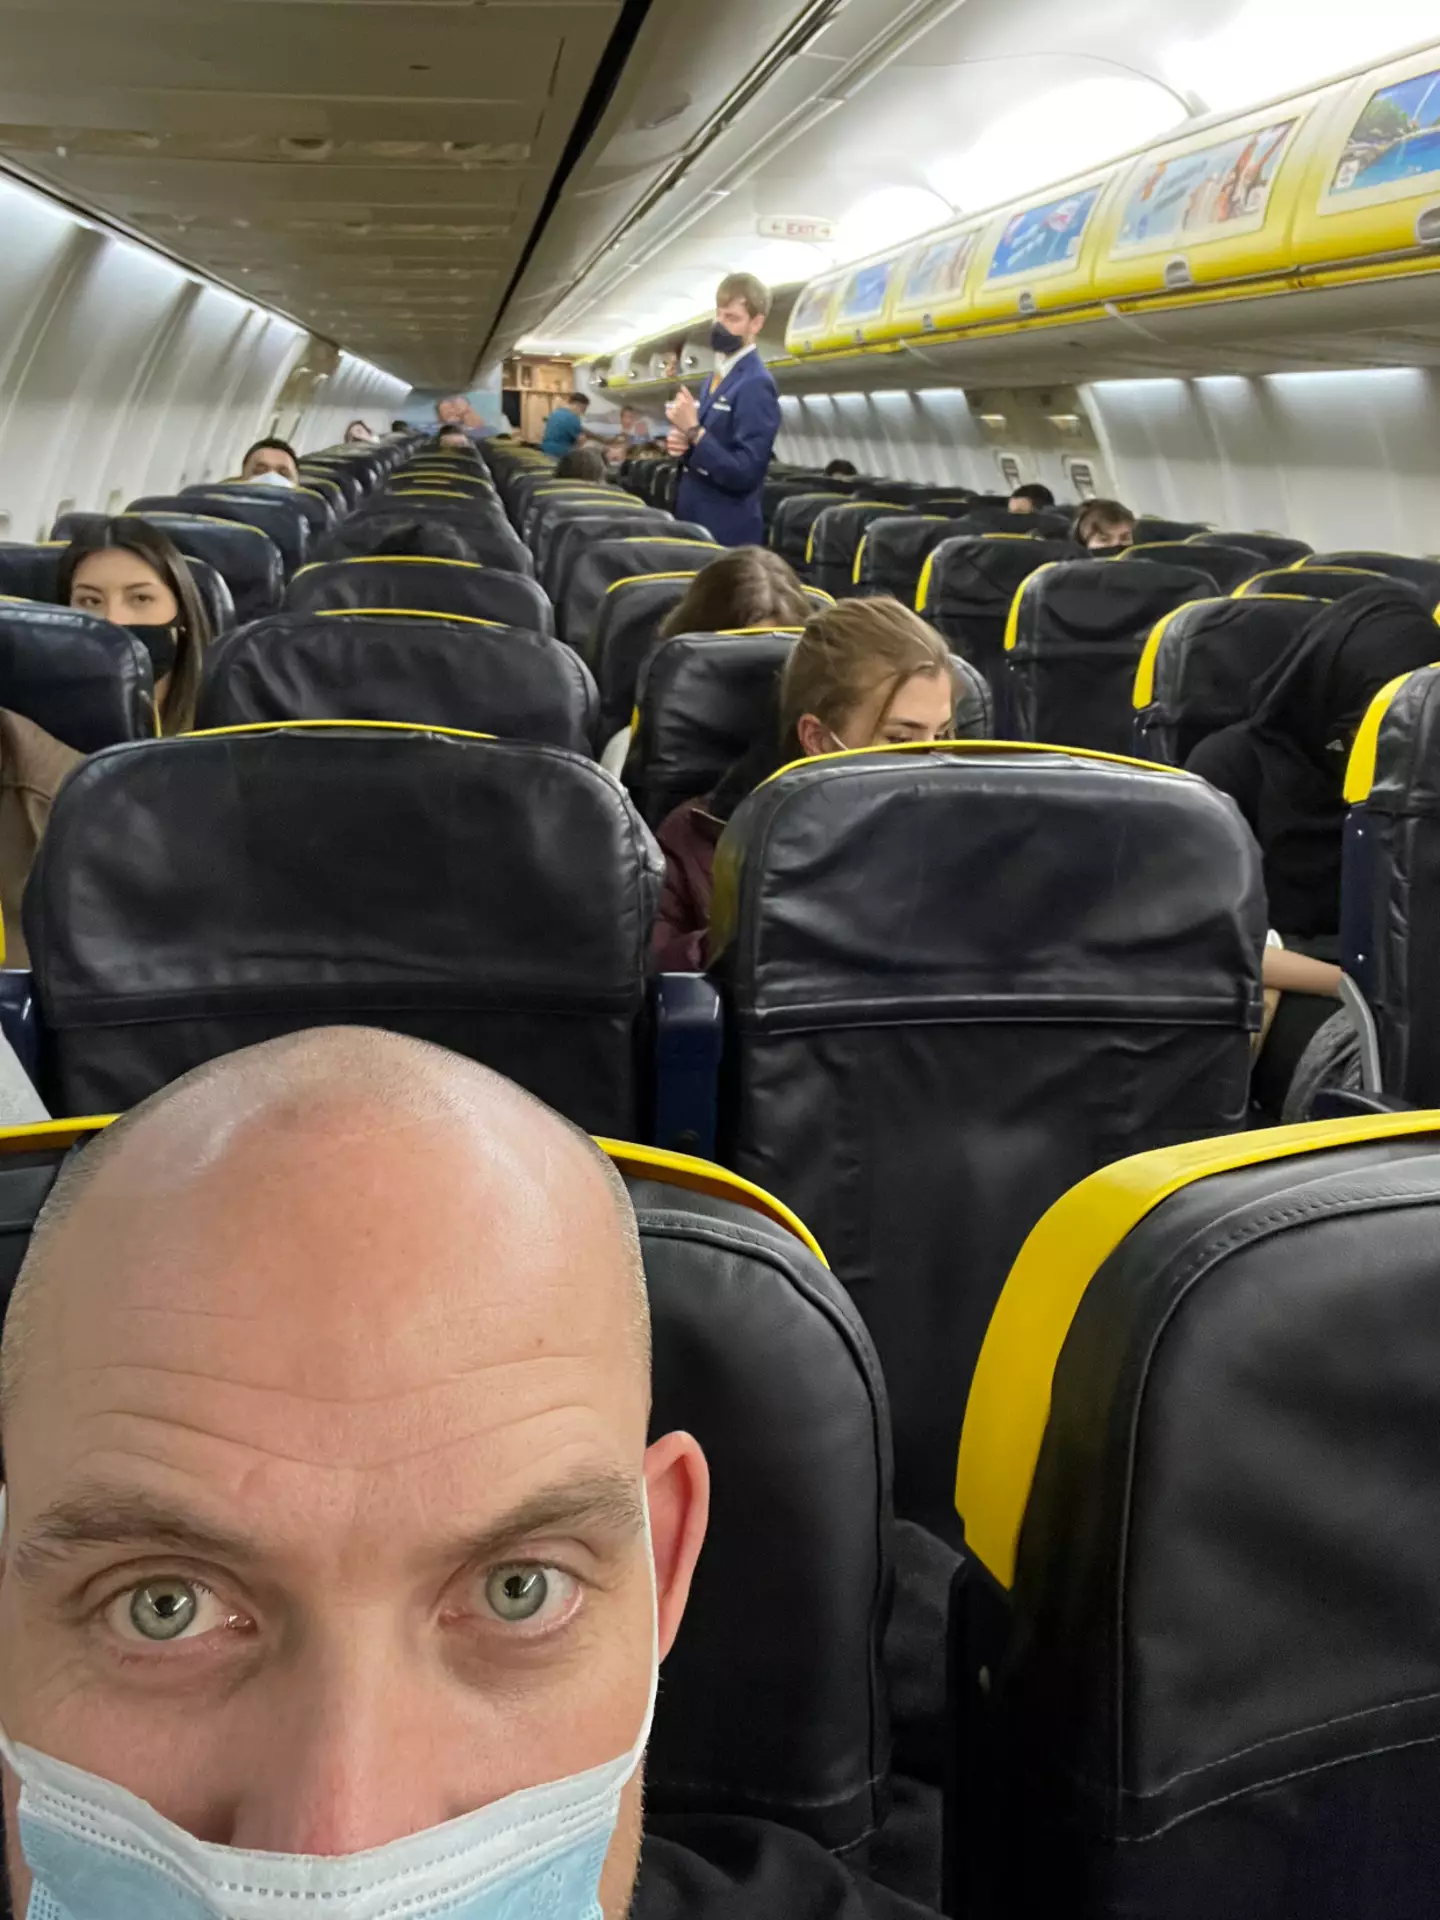 Simon on board the Ryanair flight.